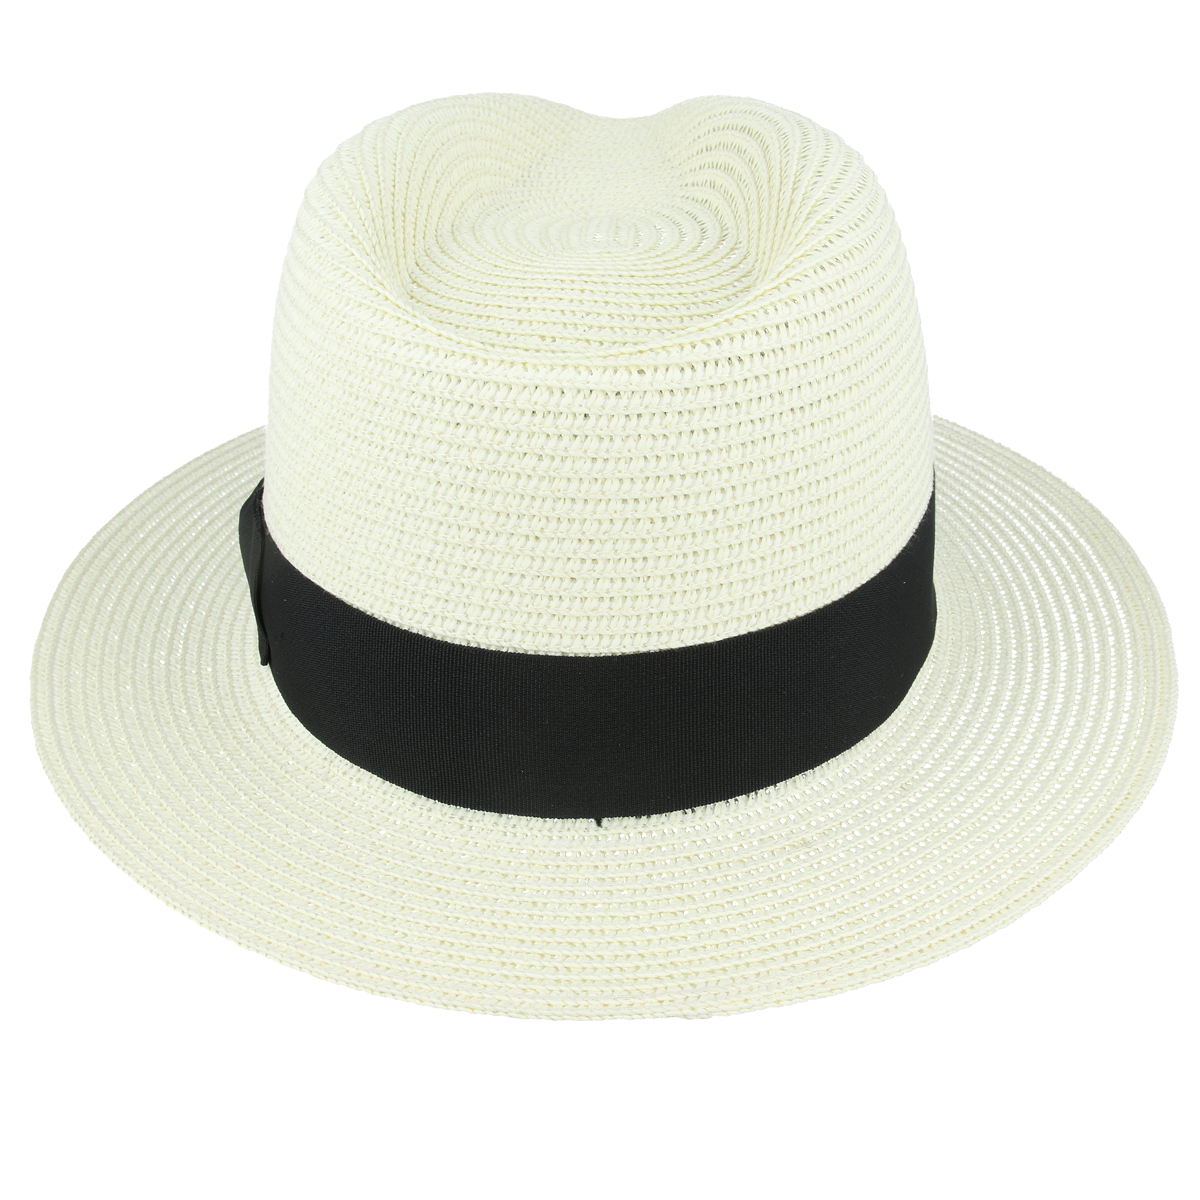 Maz Straw Fedora Hat With Band